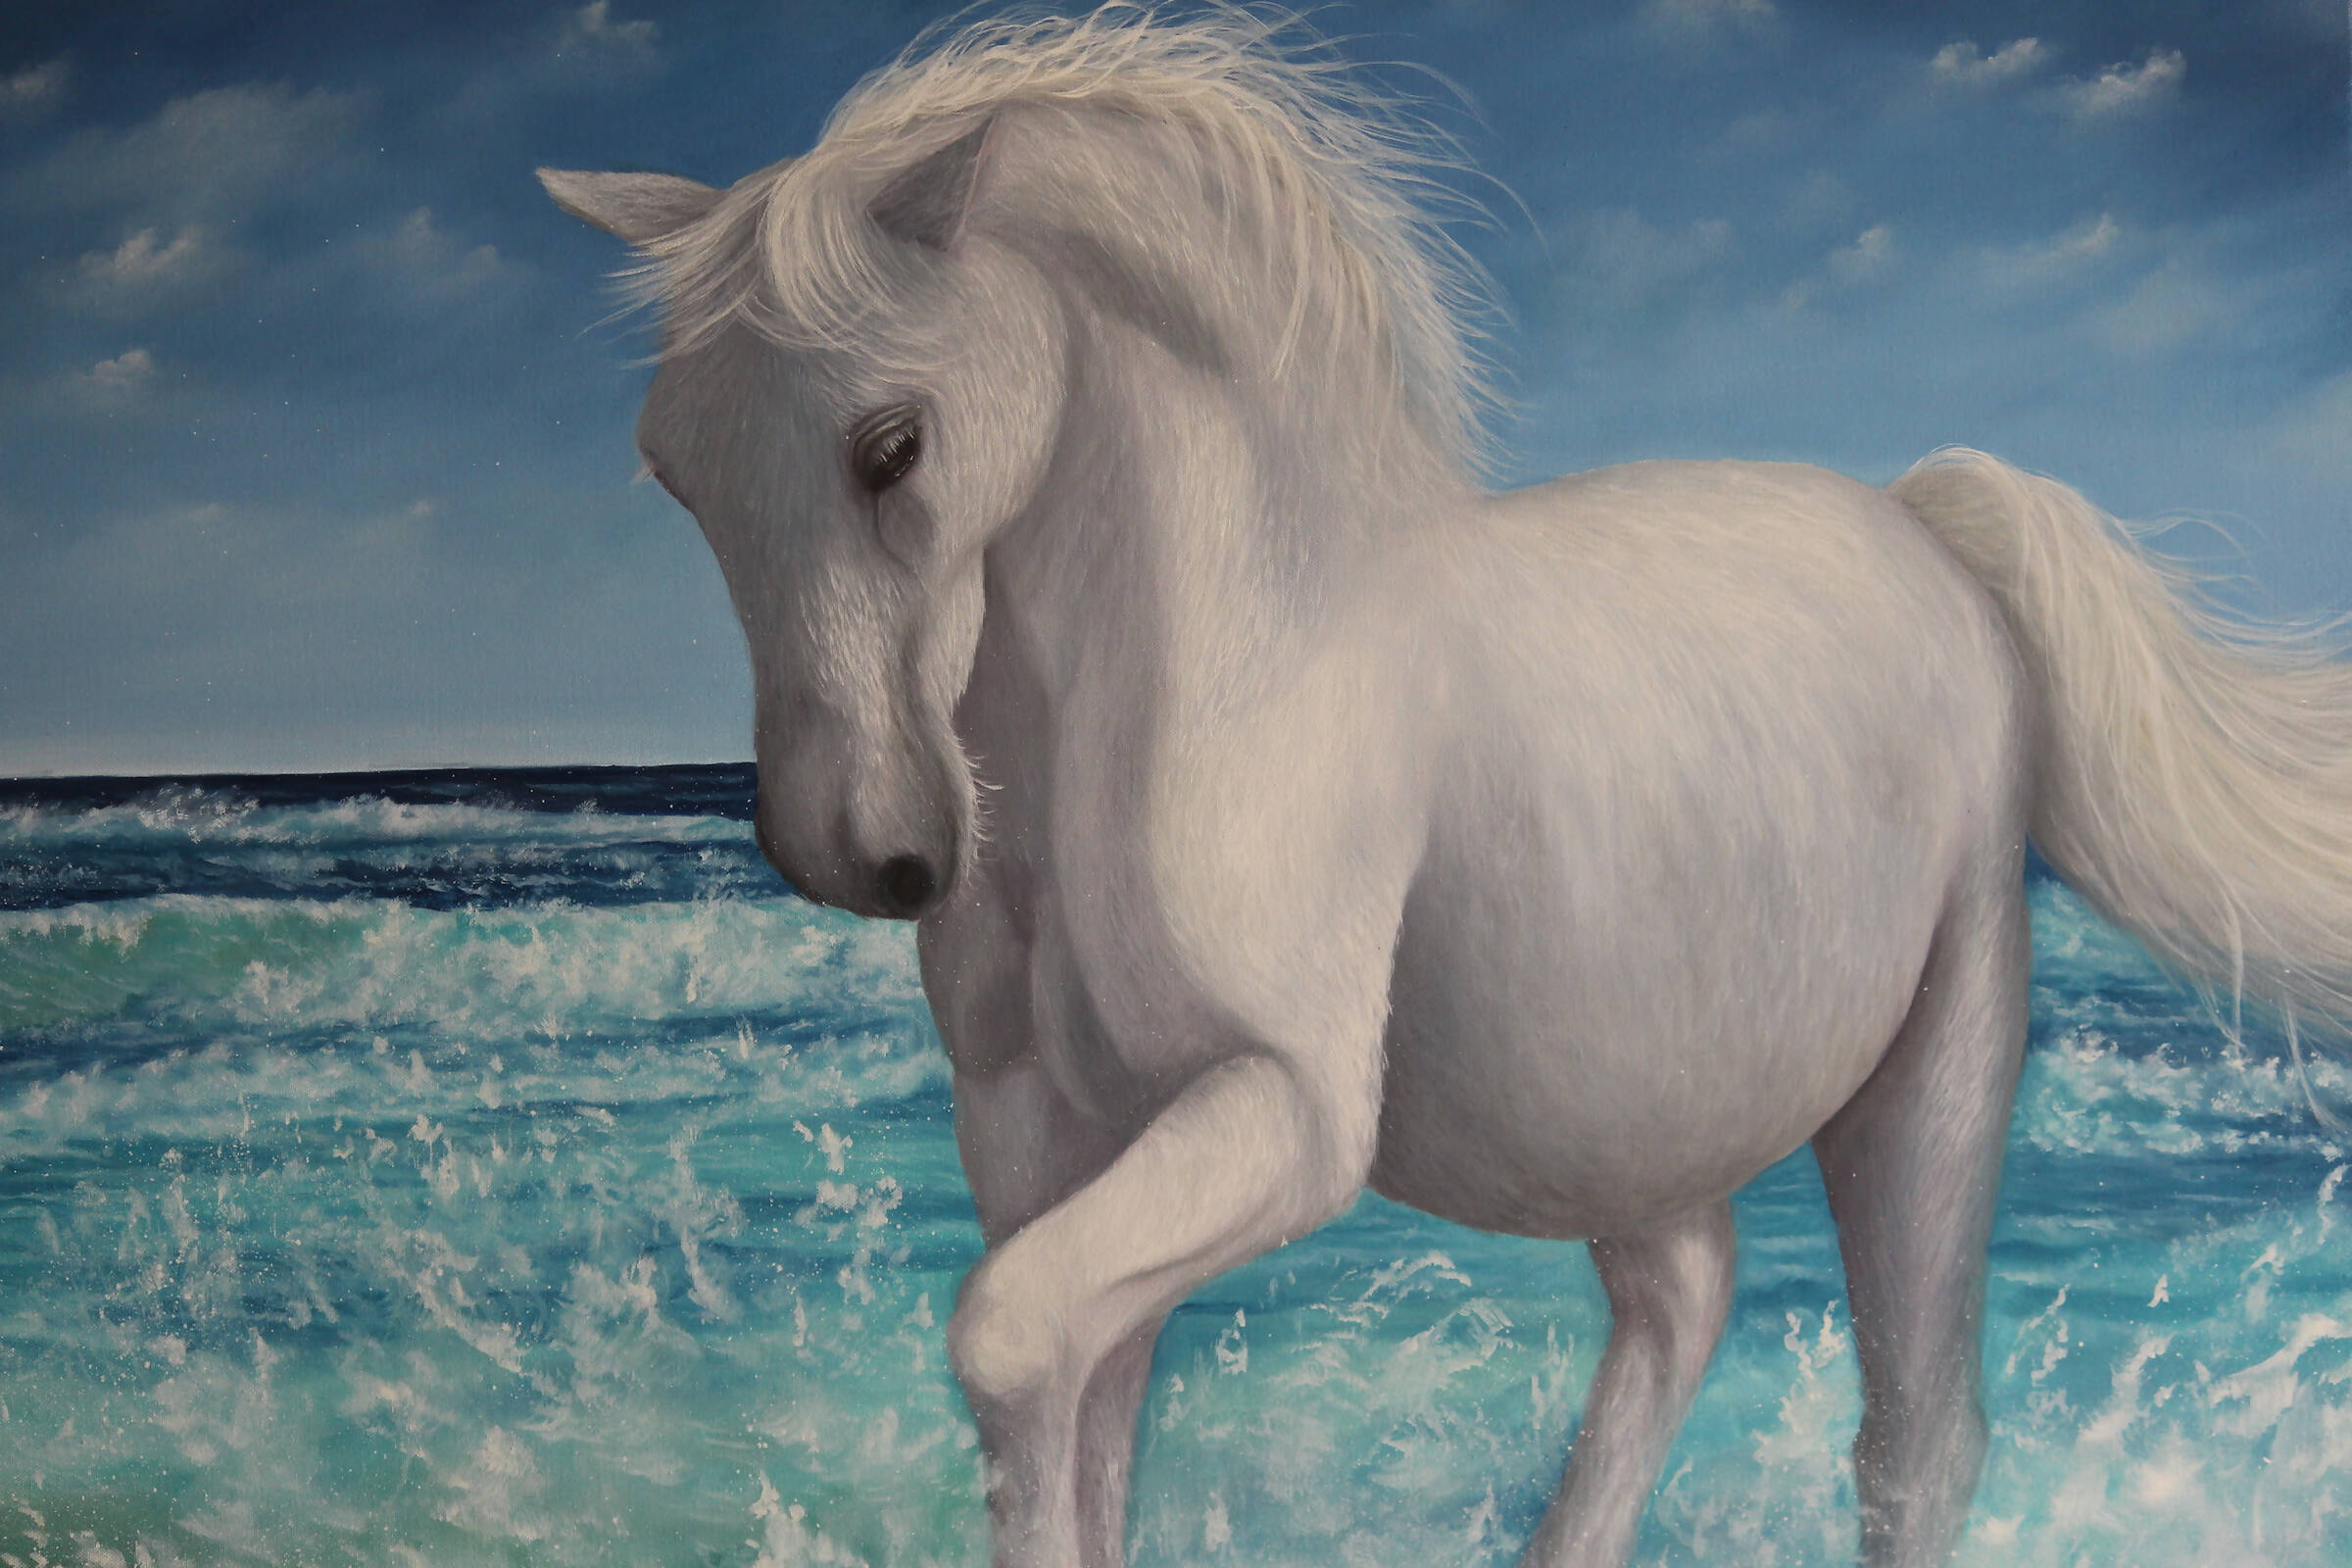 White horse at sea